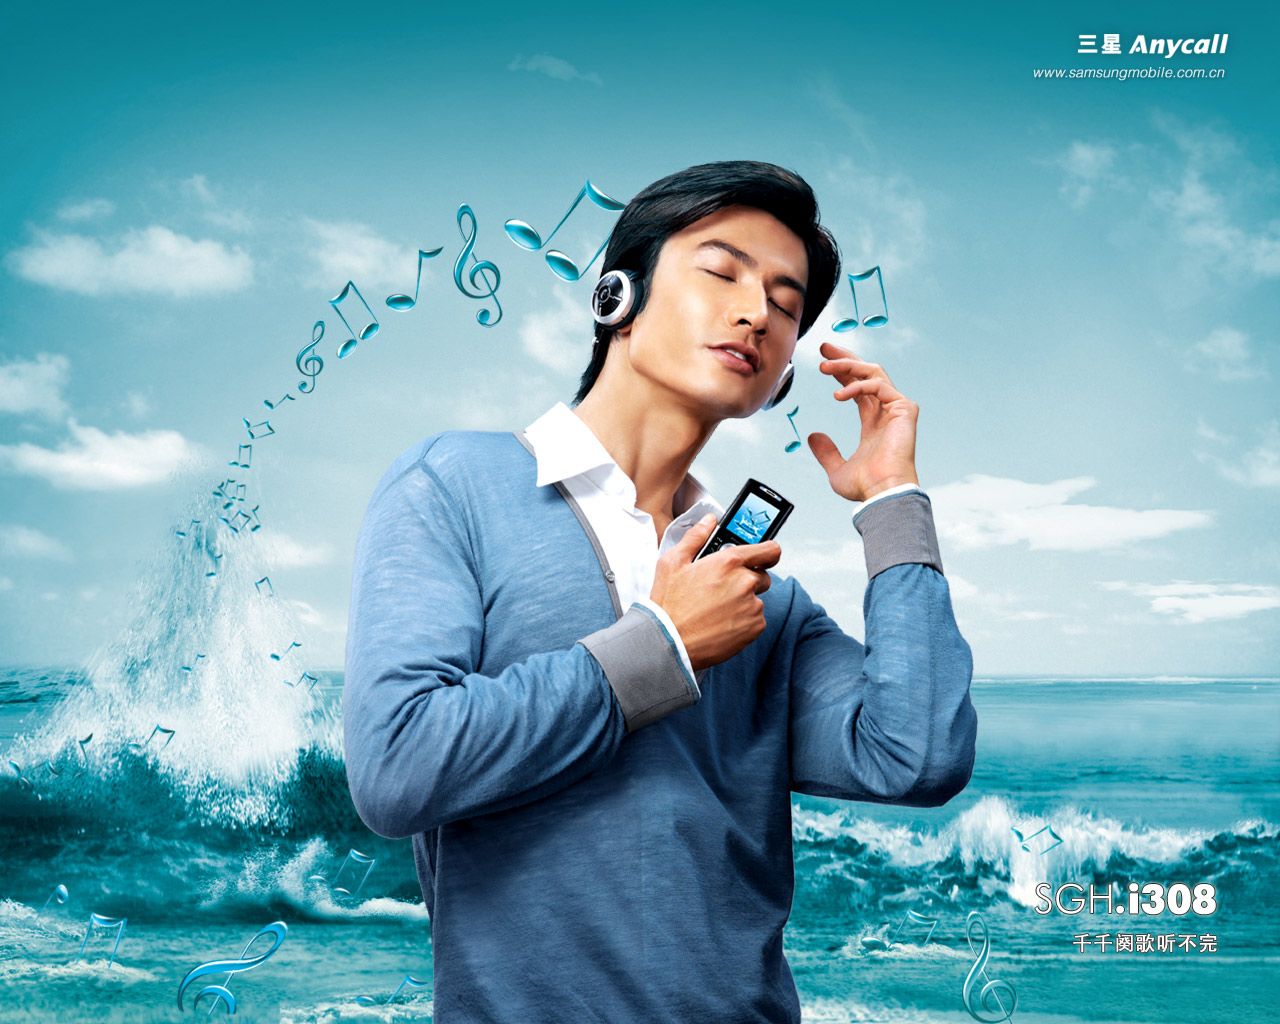 Samsung fashion phone wallpaper high definition 3505 - Mobile